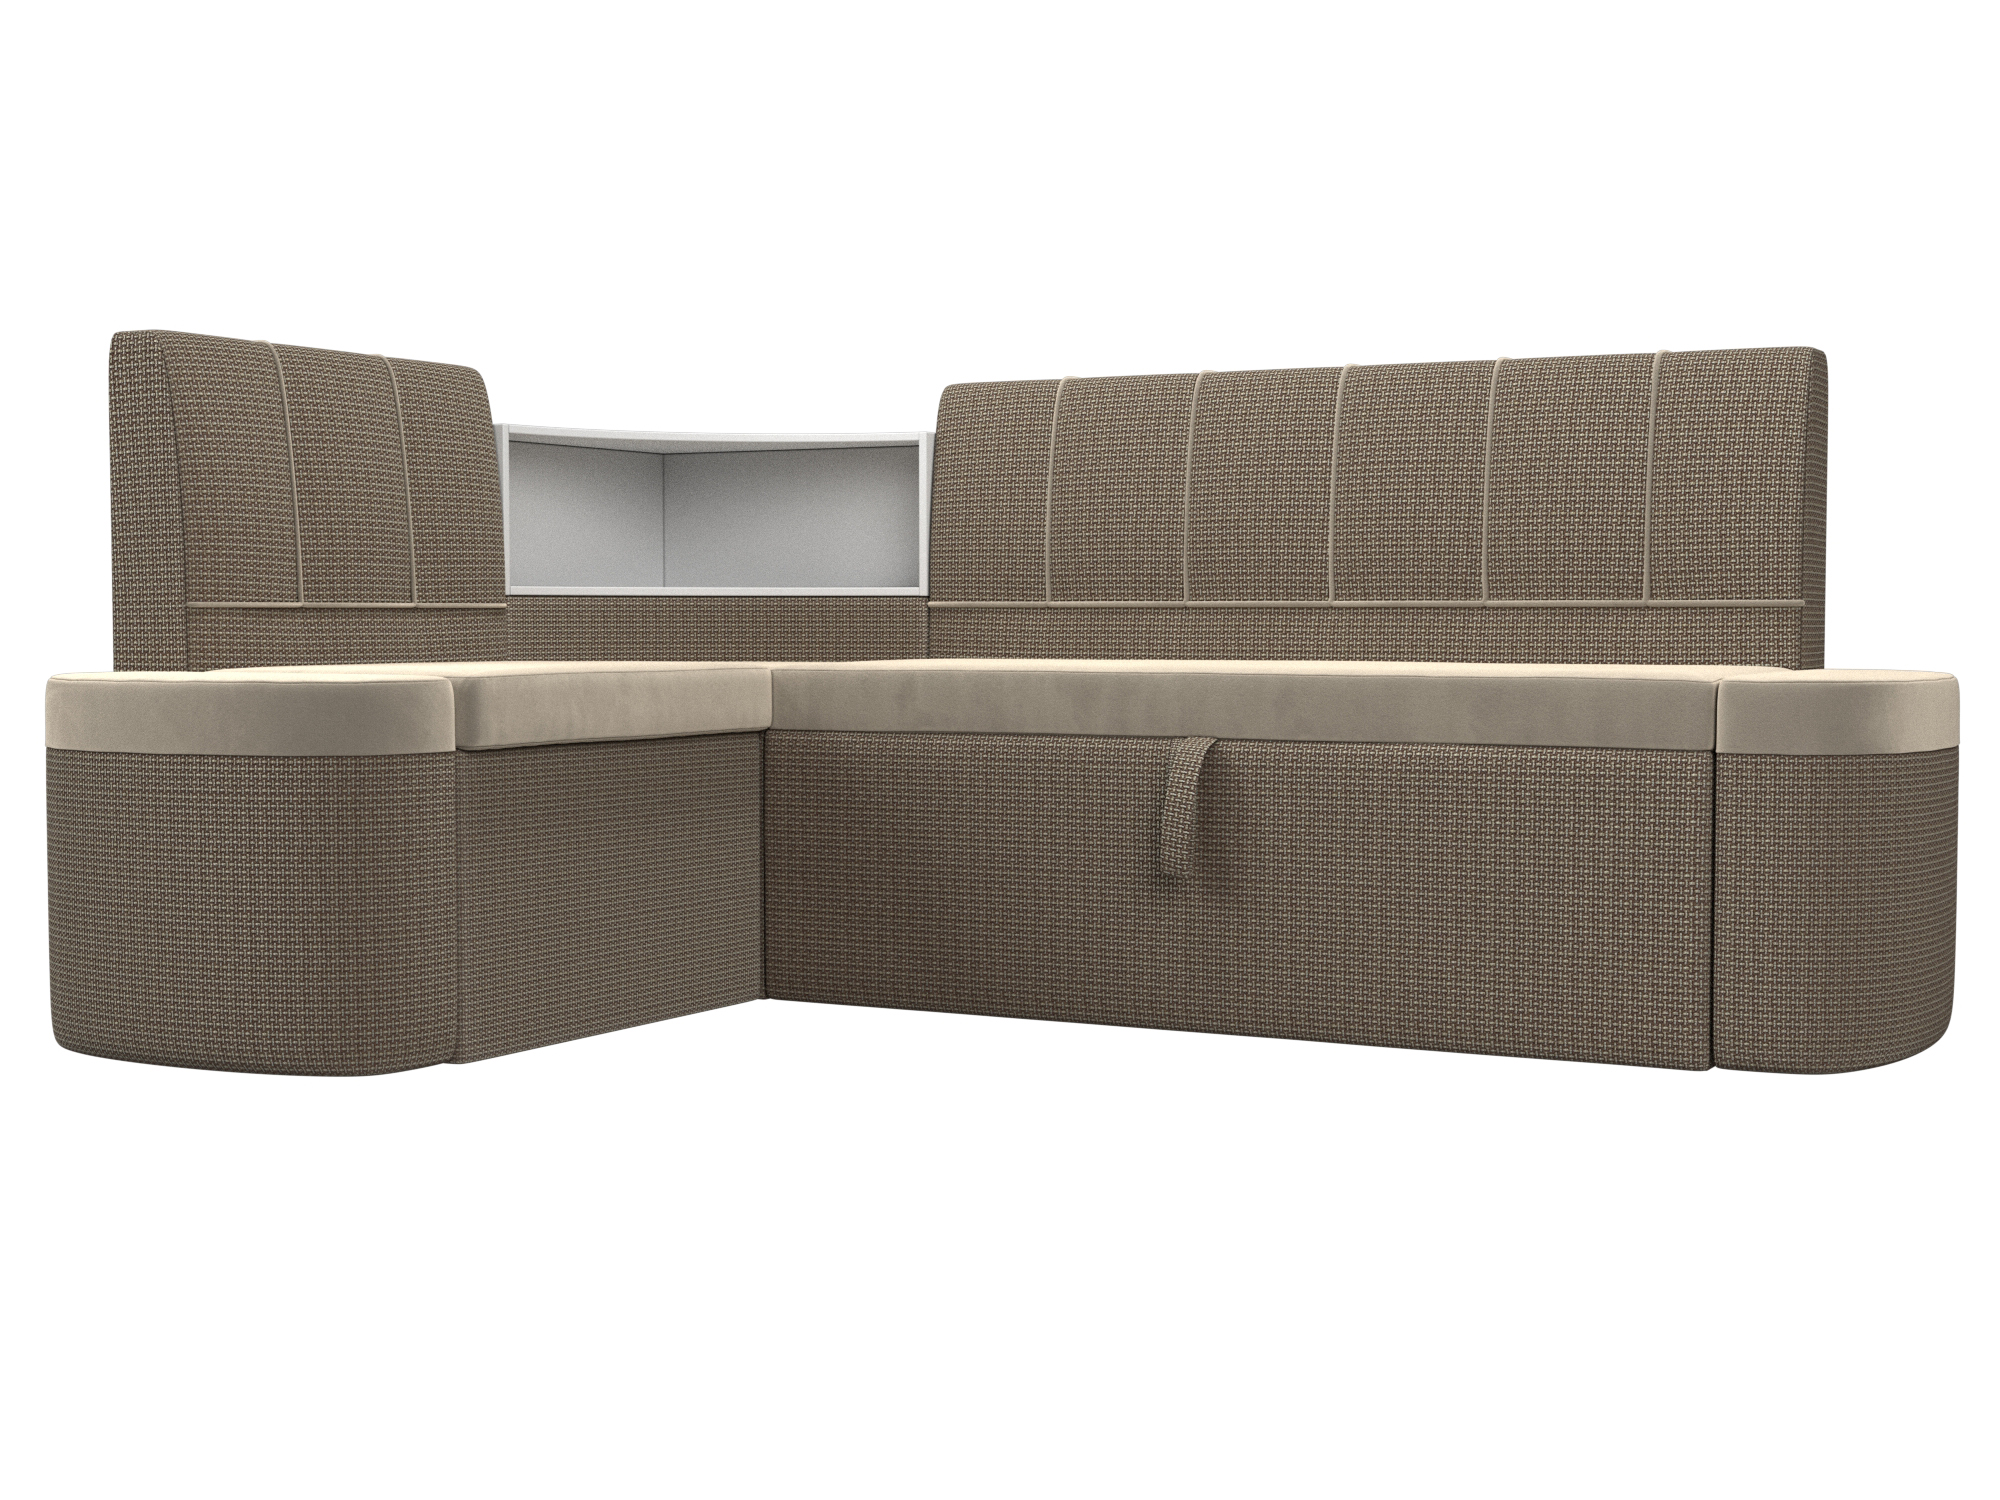 фото Лига диванов кухонный угловой диван тефида левый угол